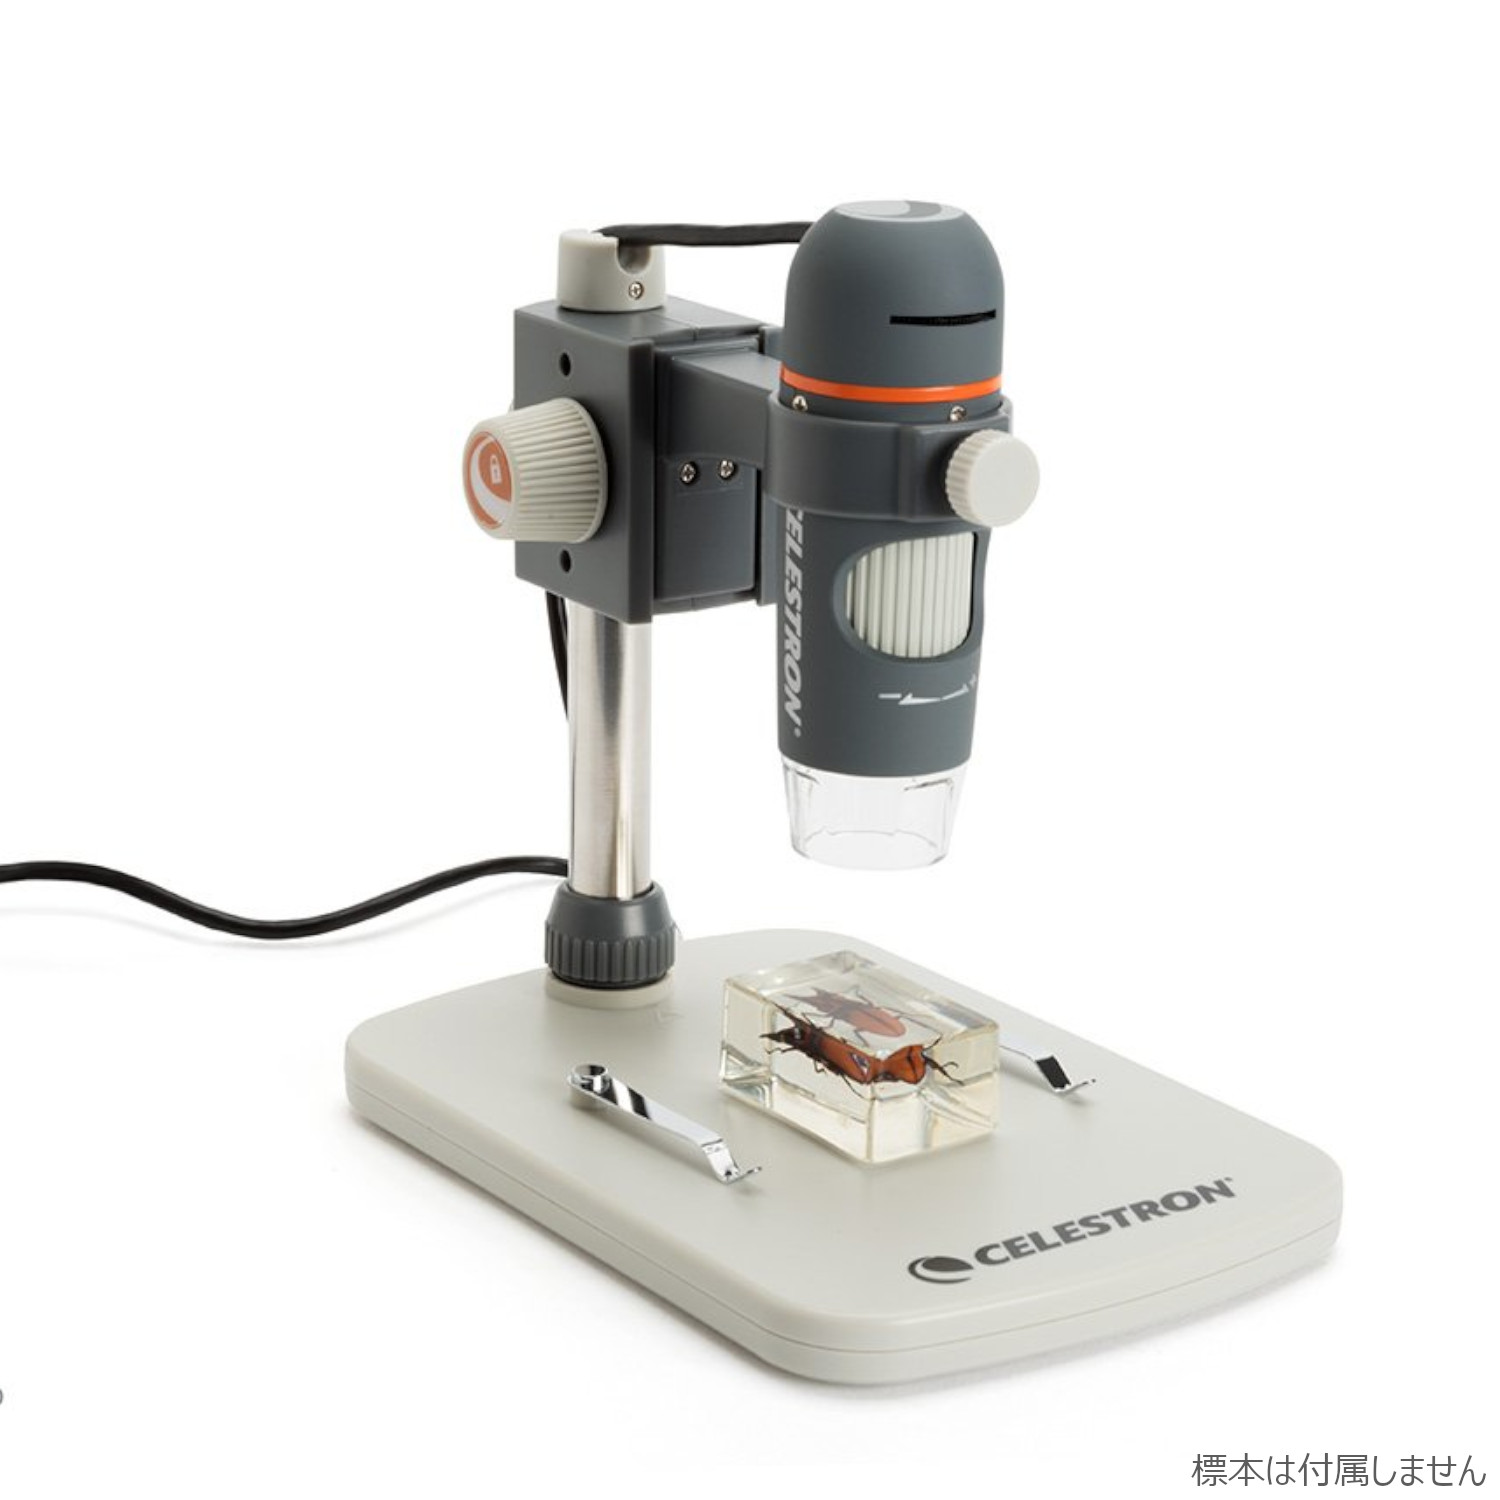 CELESTRON 顕微鏡 デジタル顕微鏡 ハンディ PRO | ビクセン Vixen